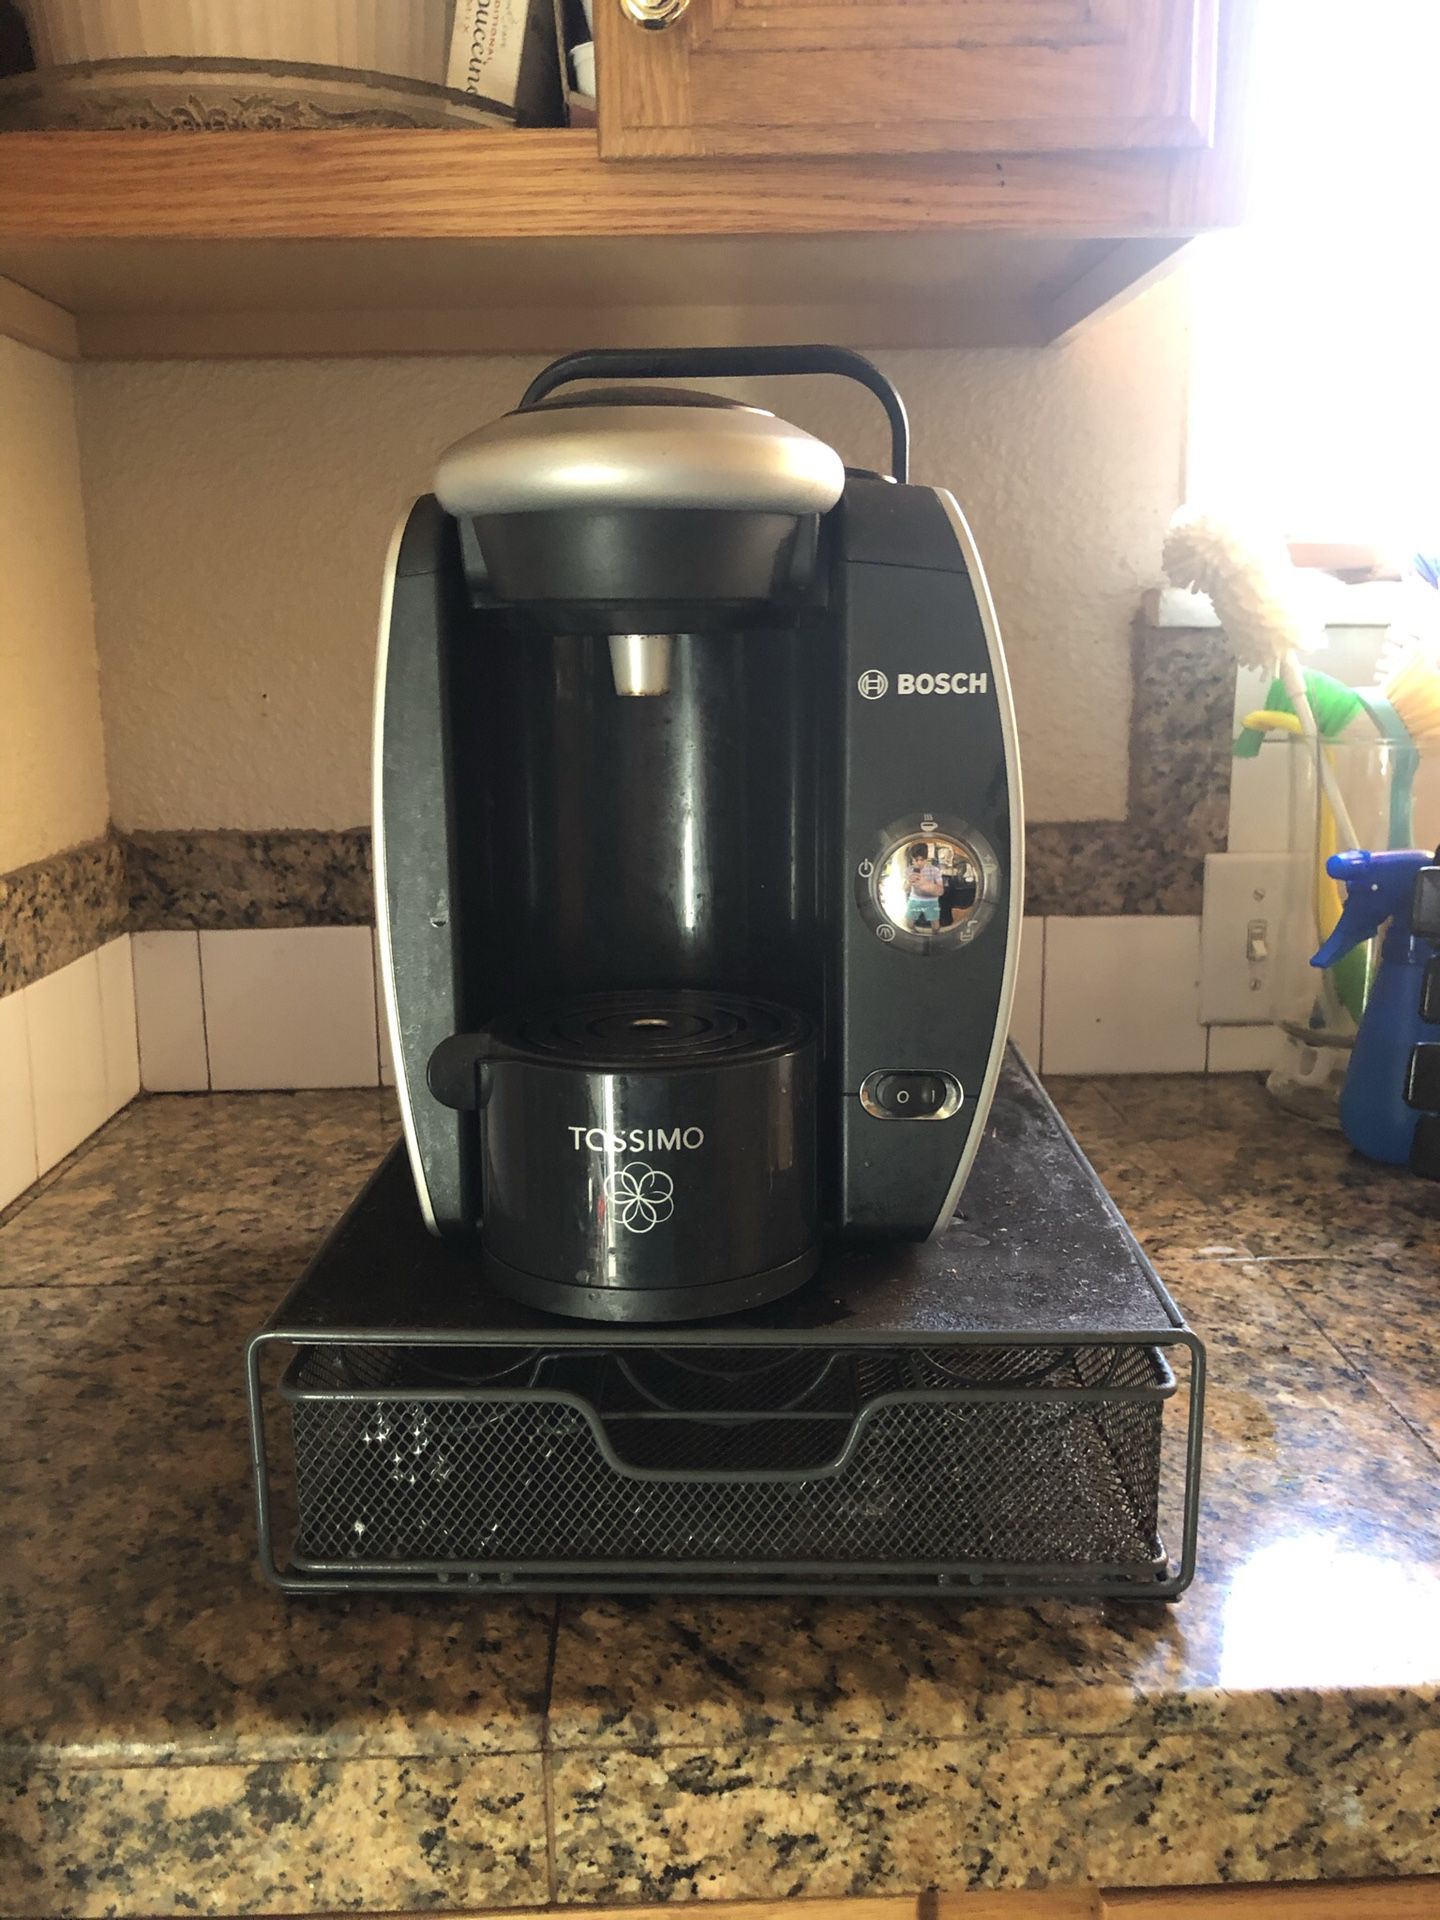 Bosh Tossimo pod coffee maker (coffee machine)